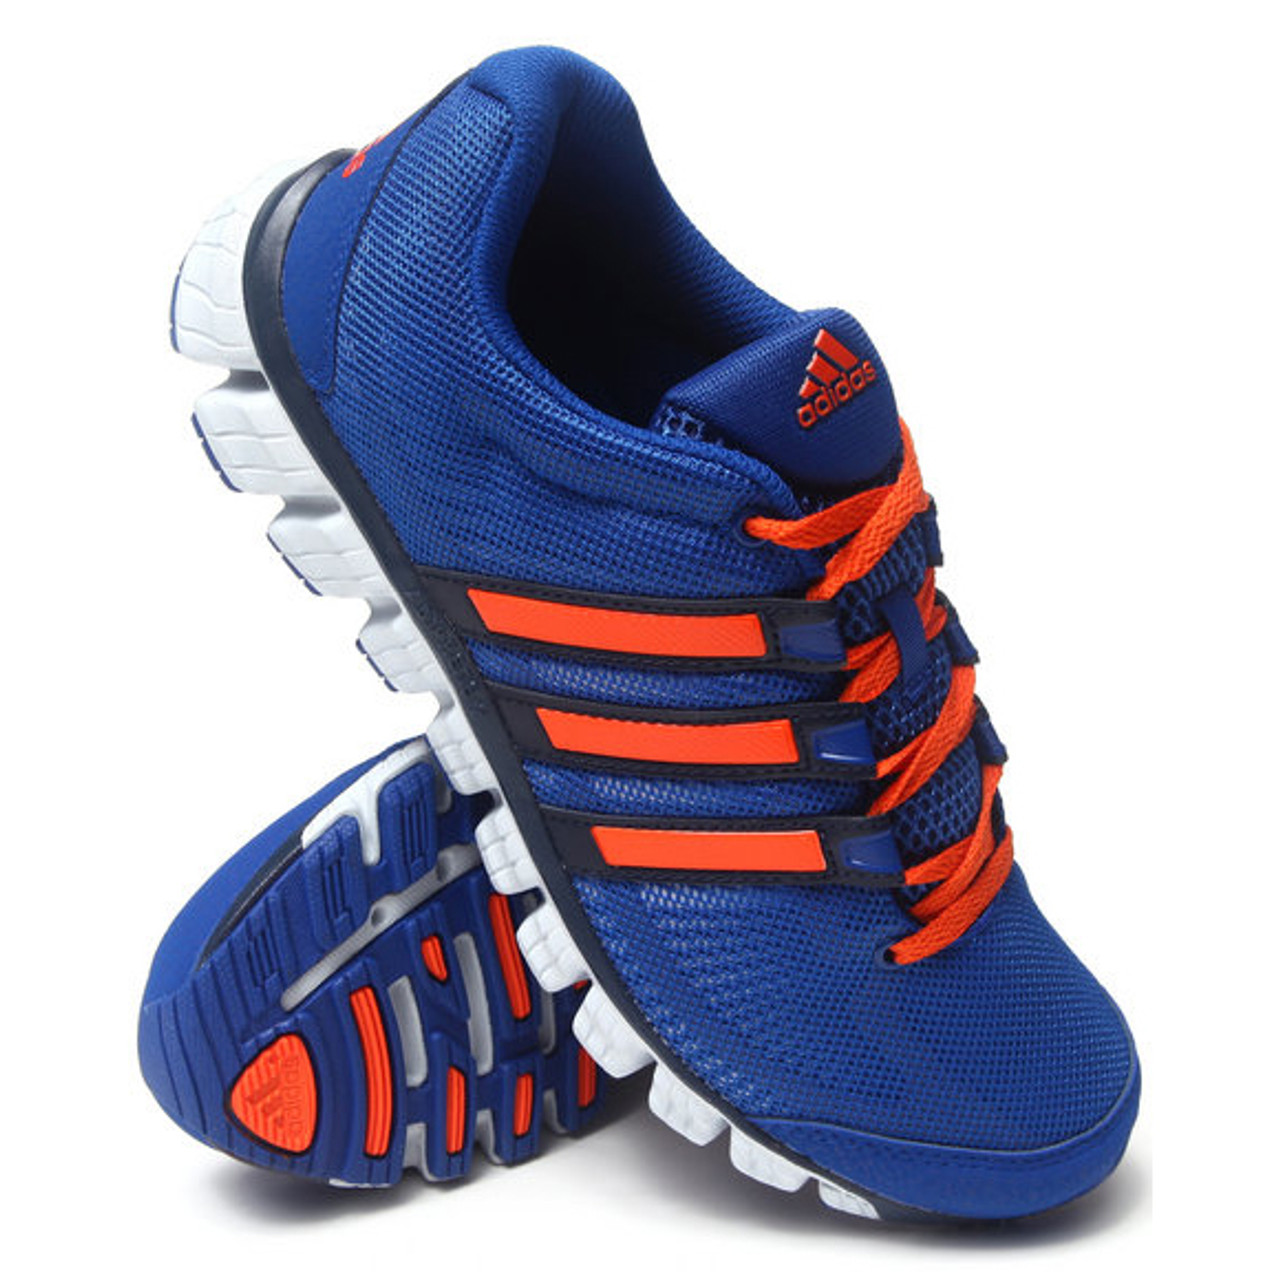 Adidas Ride Navy/Orange Mens Shoes - Collegiate Royal/Collegiate Navy/Orange | Discount Adidas Men's Athletic Shoes & More - Shoolu.com